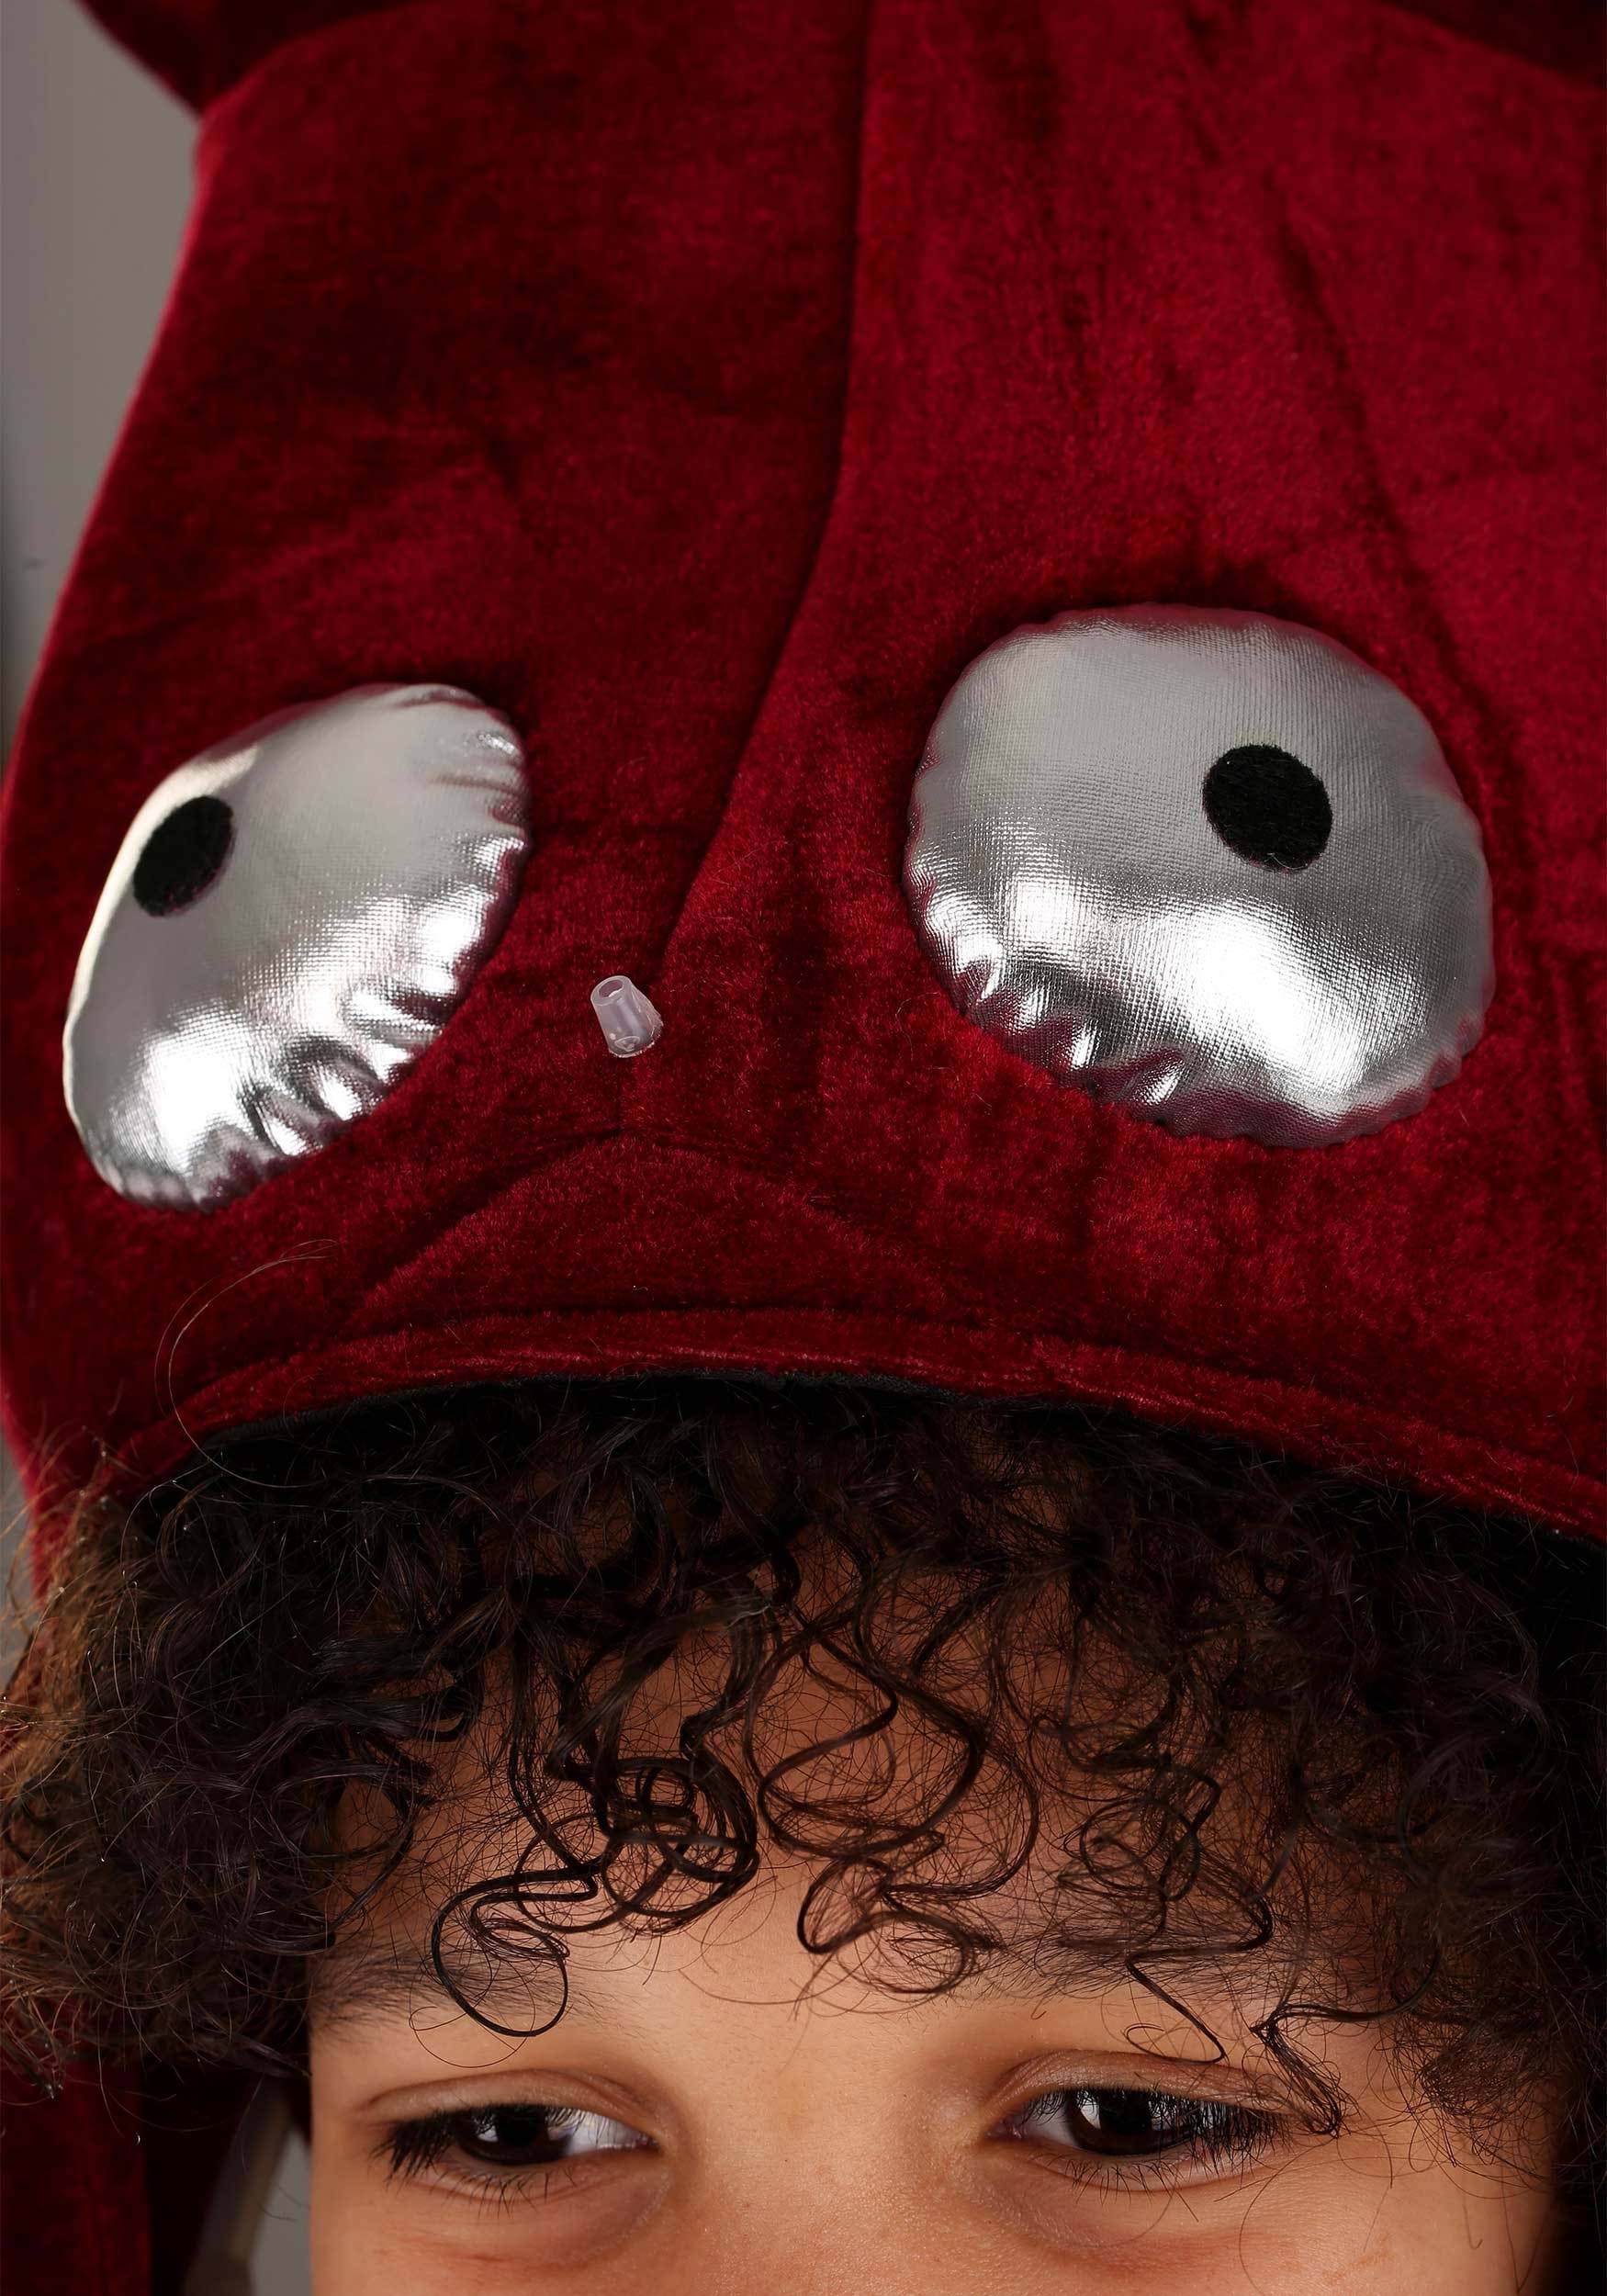 Toy Hat - Squid Sprazy